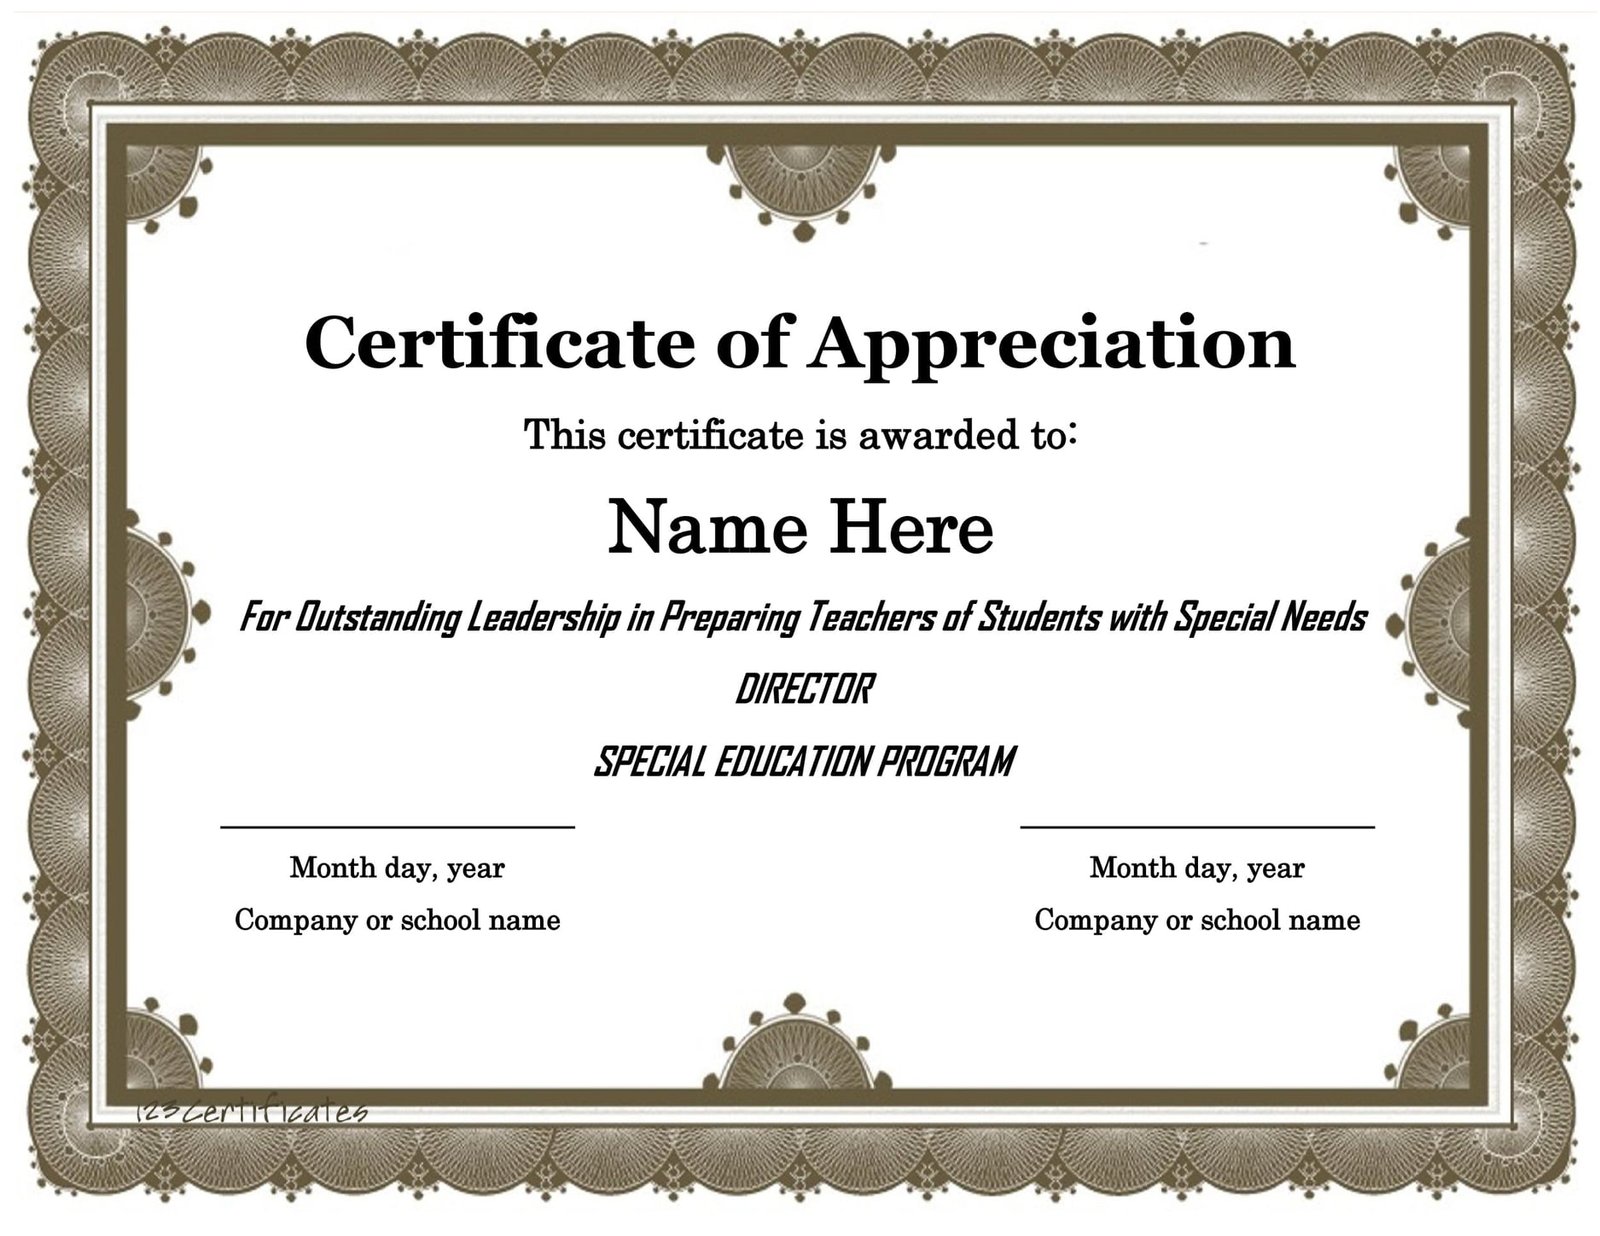 Certificate of Appreciation Wording wordingideas com